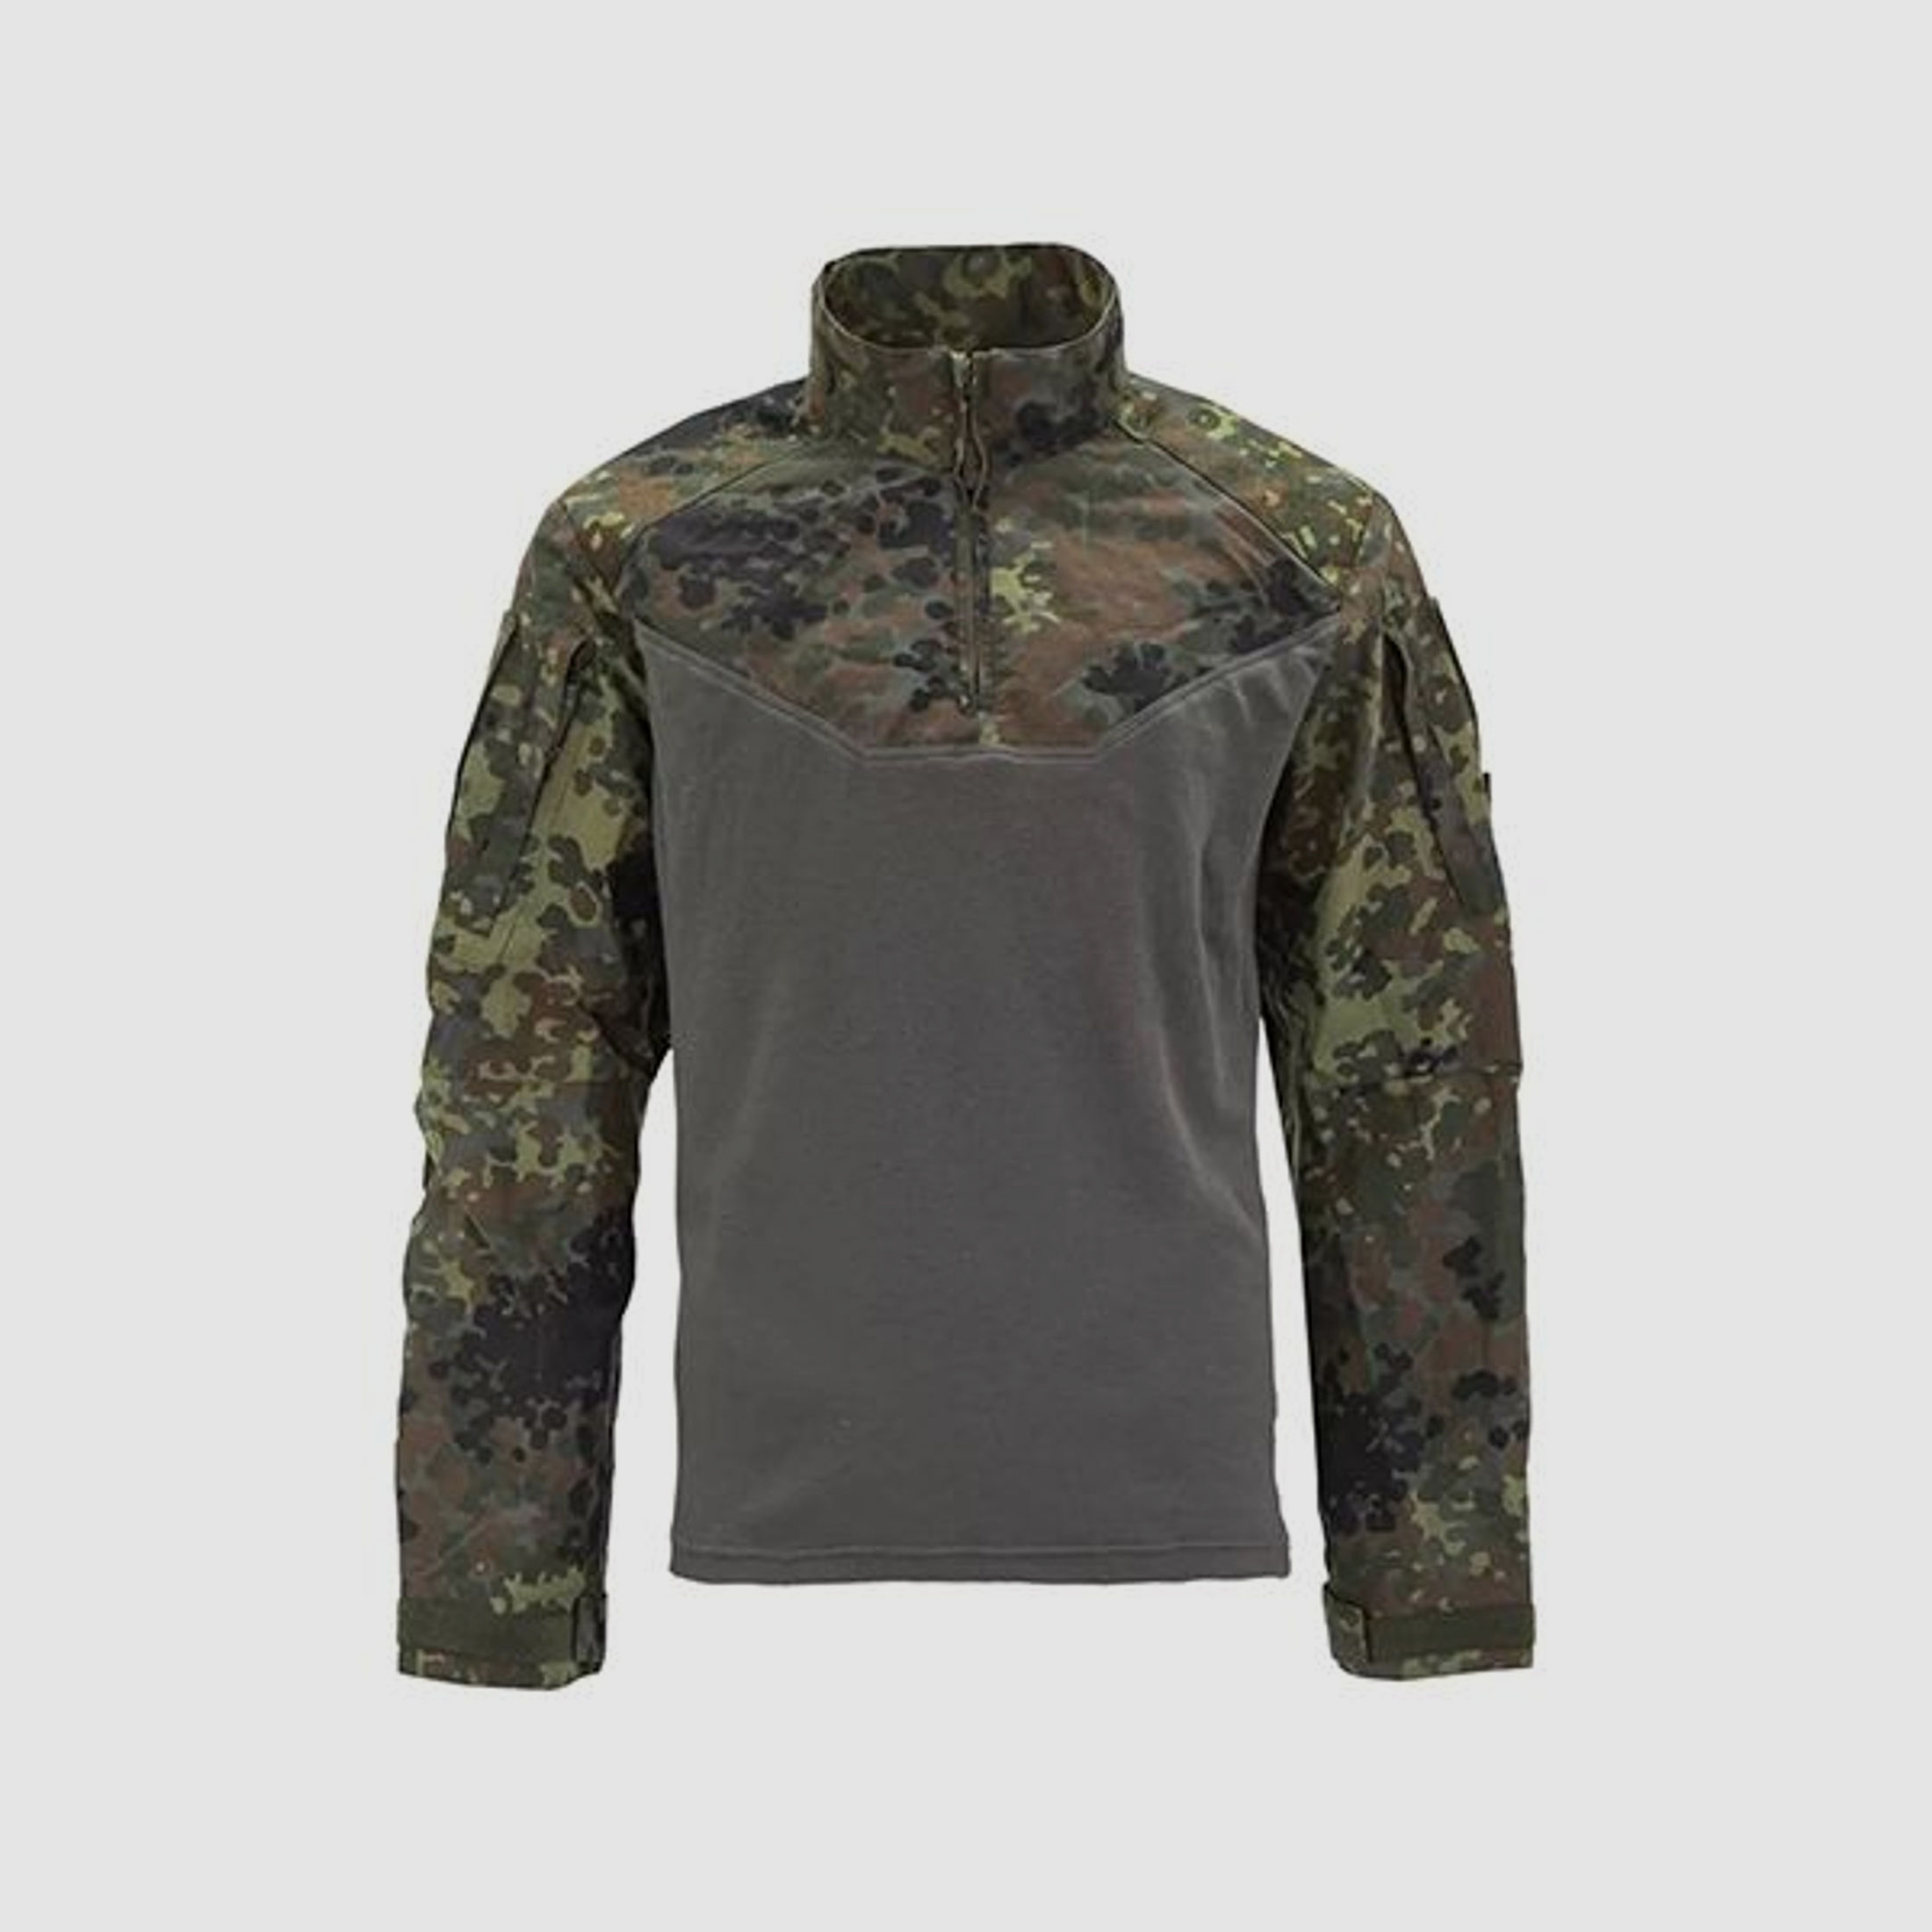 Carinthia Carinthia Combat Shirt CCS 5-farb-flecktarn